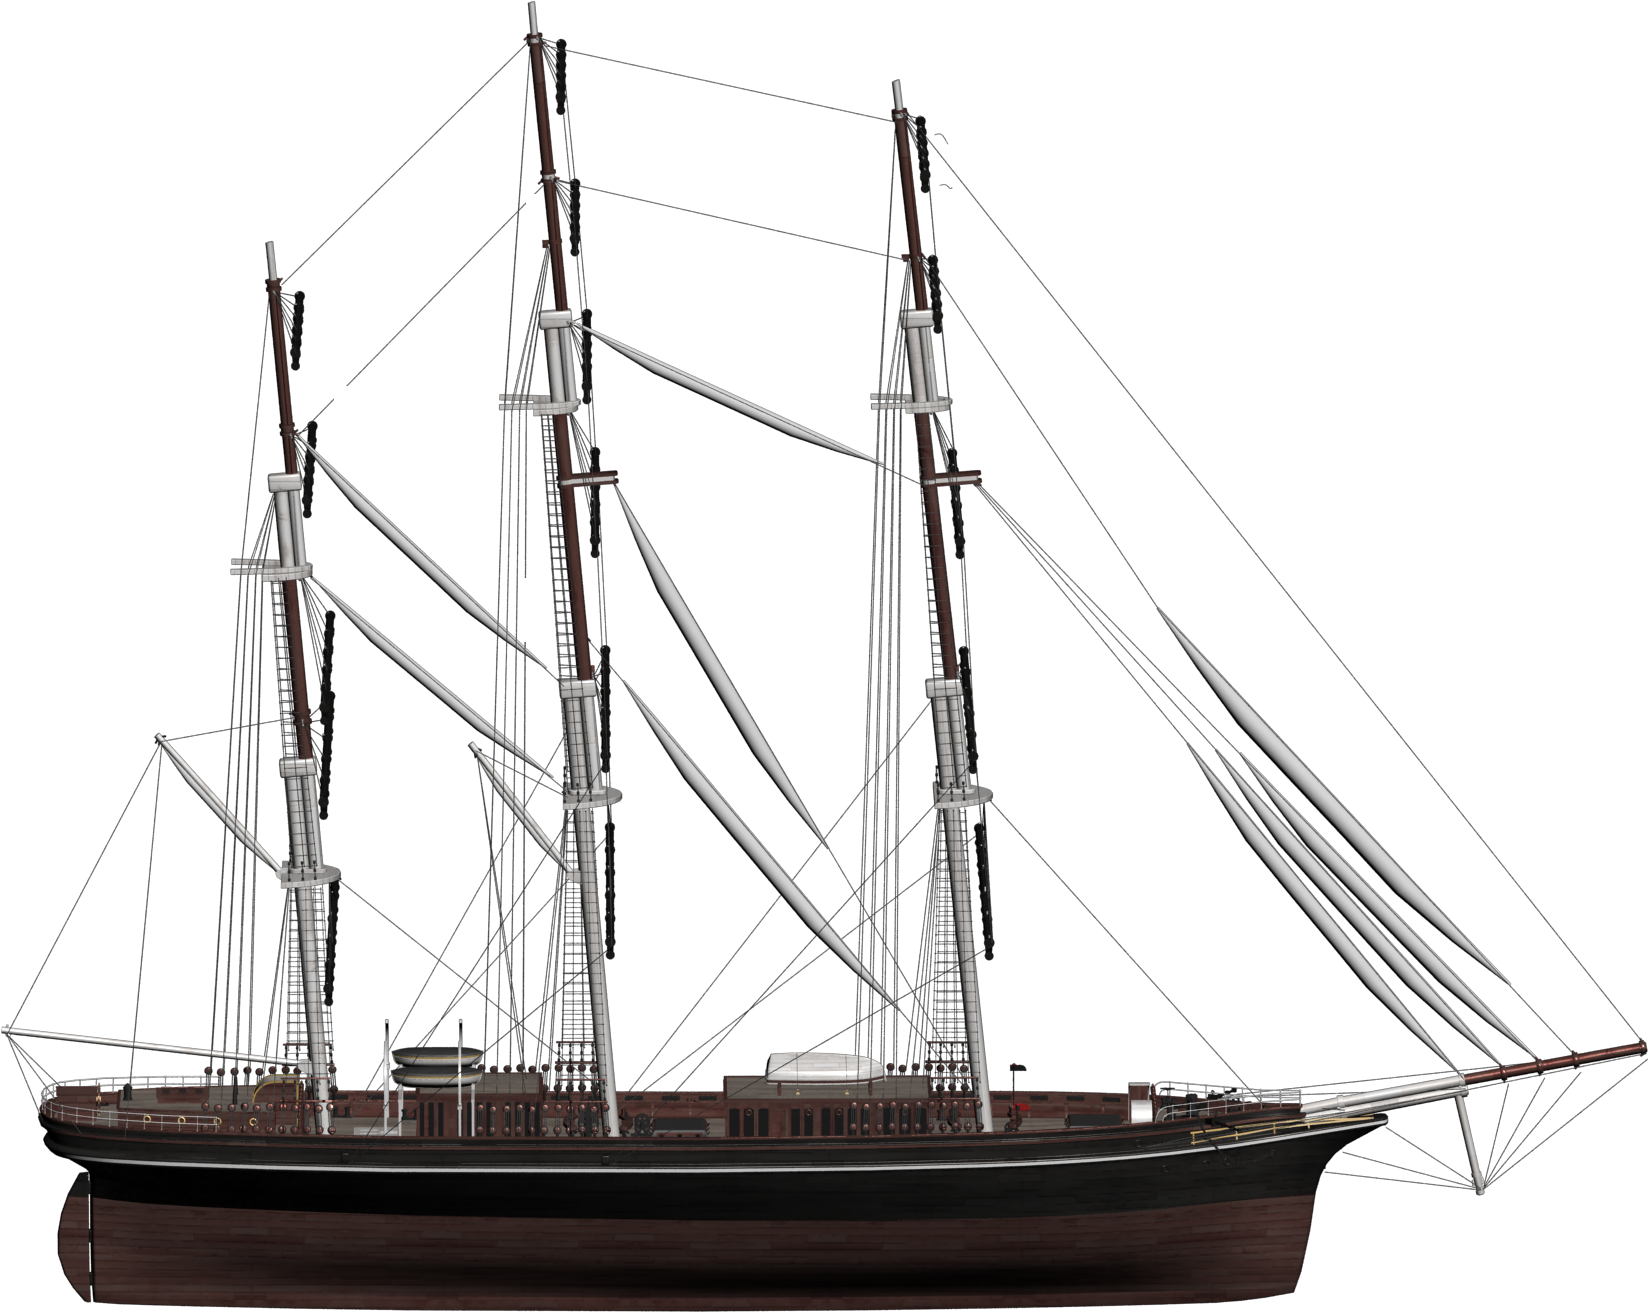 A Model Of A Ship